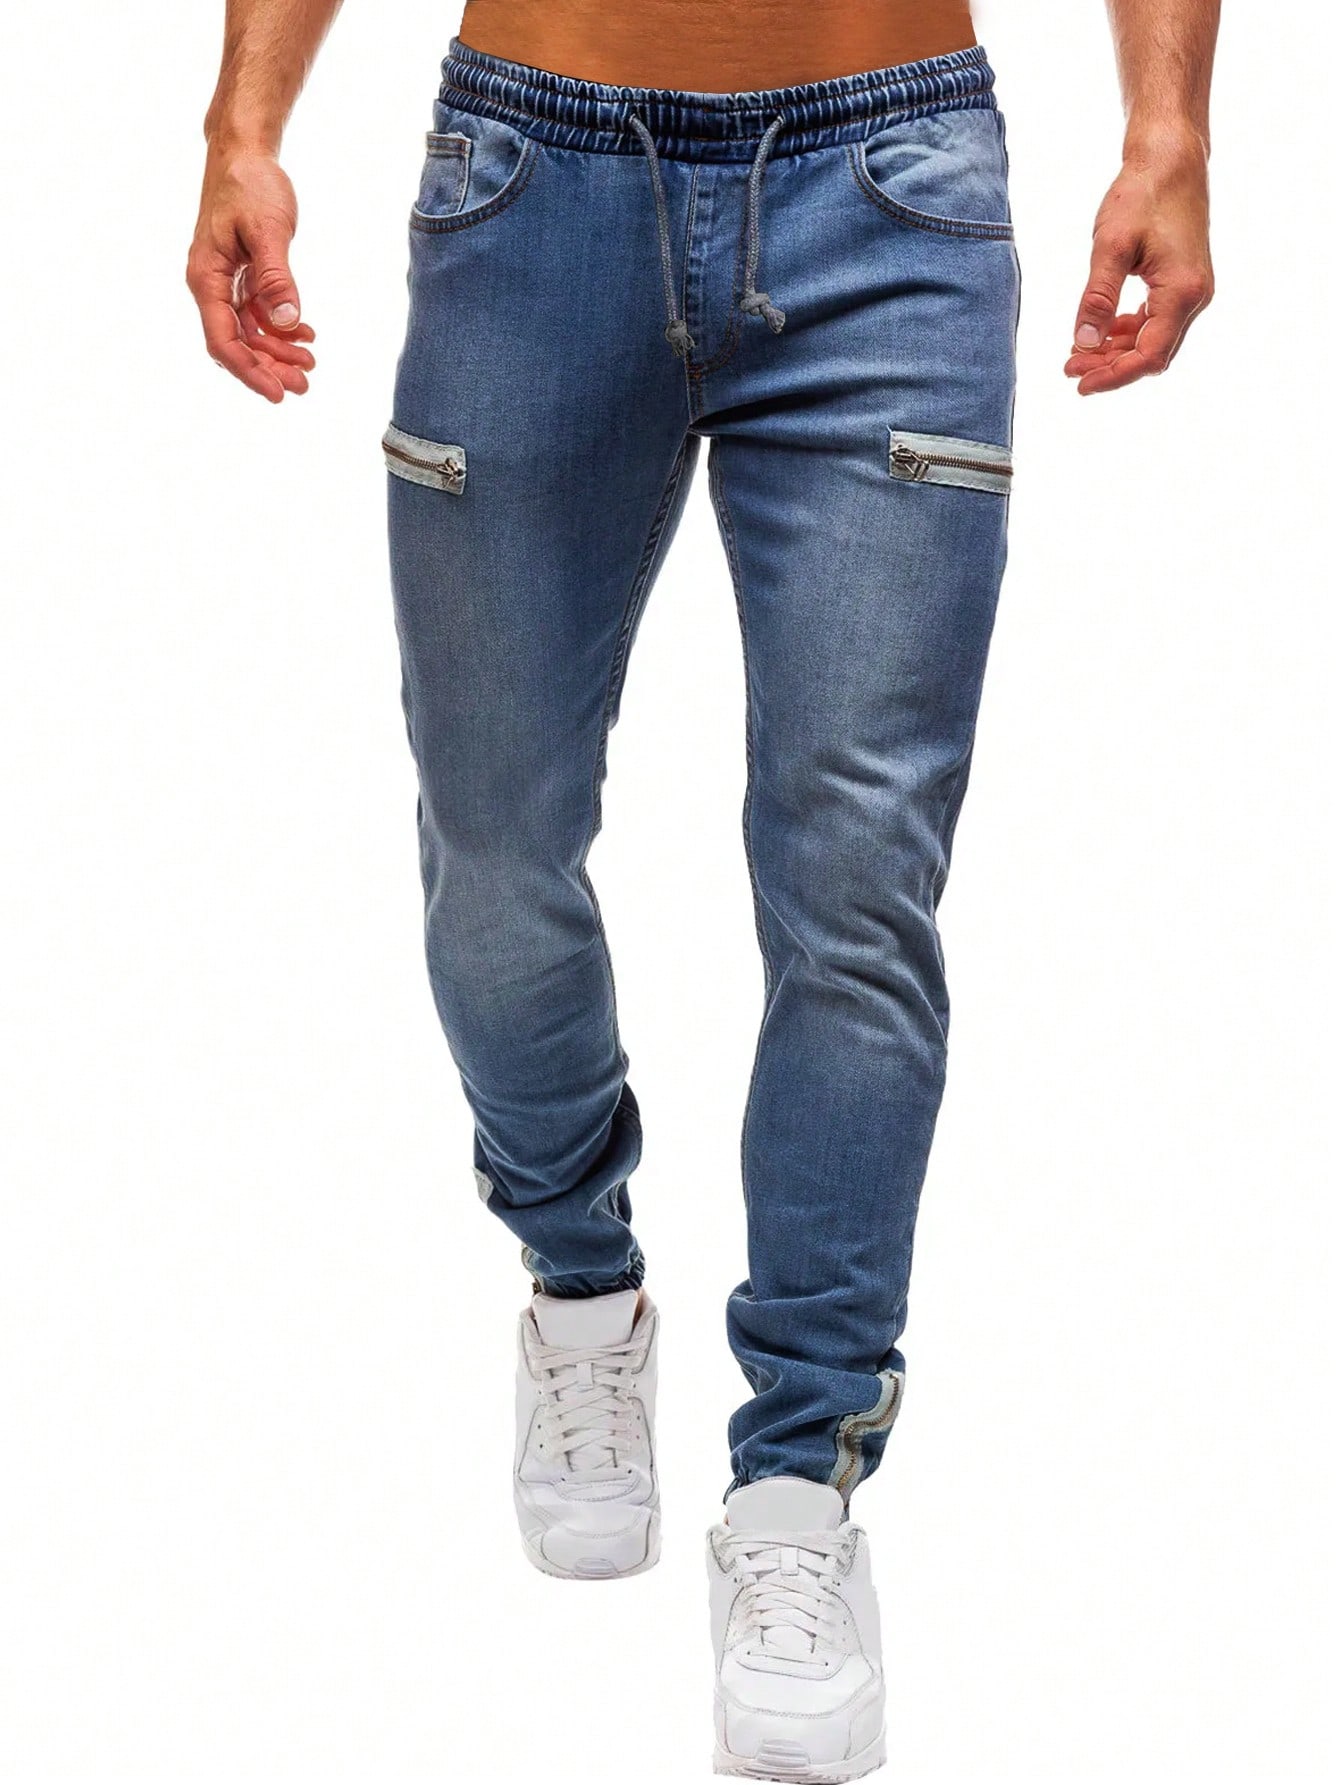 Мужские джинсы Manfinity LEGND с завязками на талии и манжетами, синий